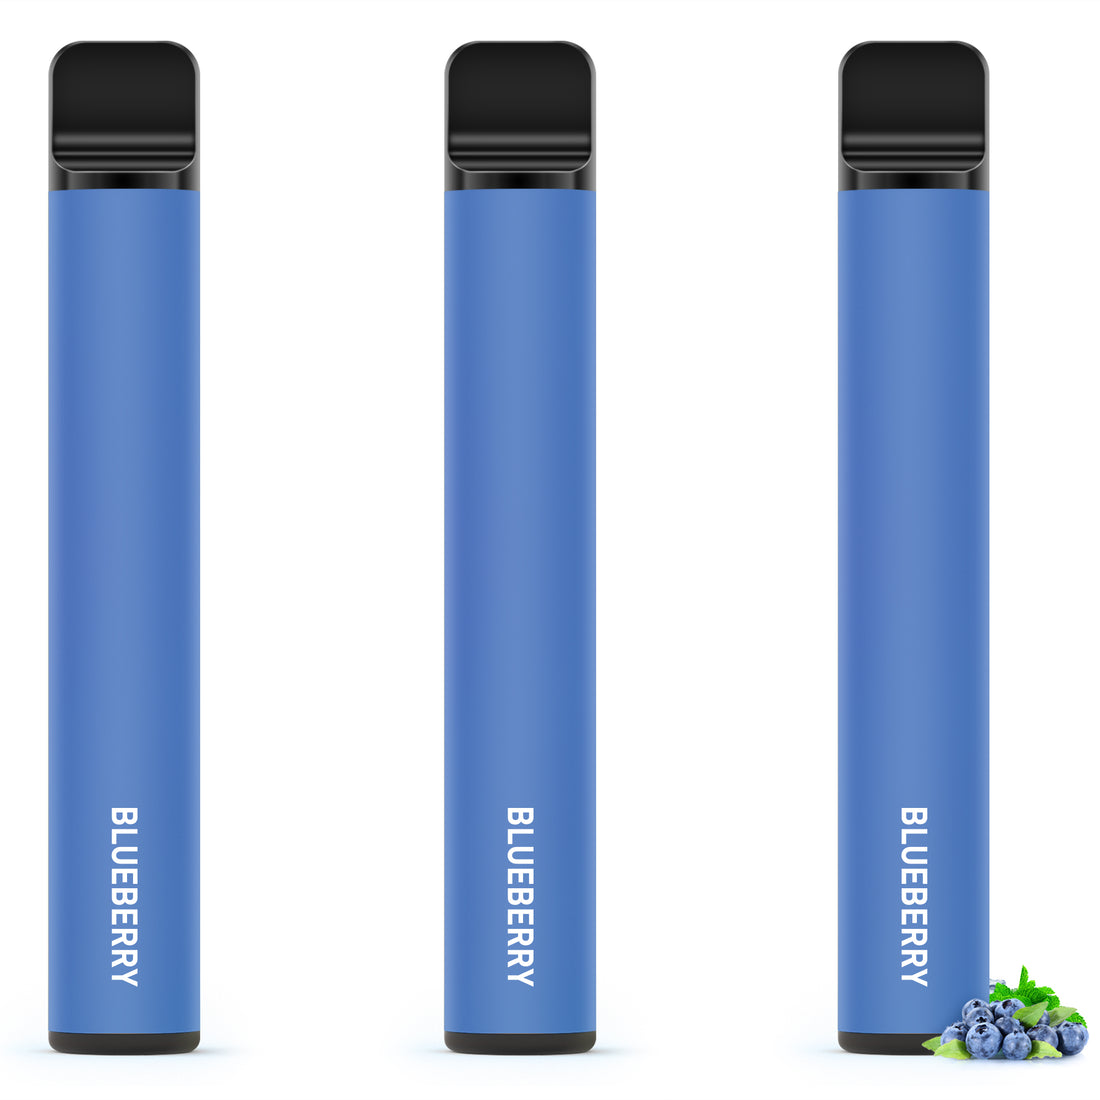 KINOE electronic cigarette disposable 3-piece set (blueberry)